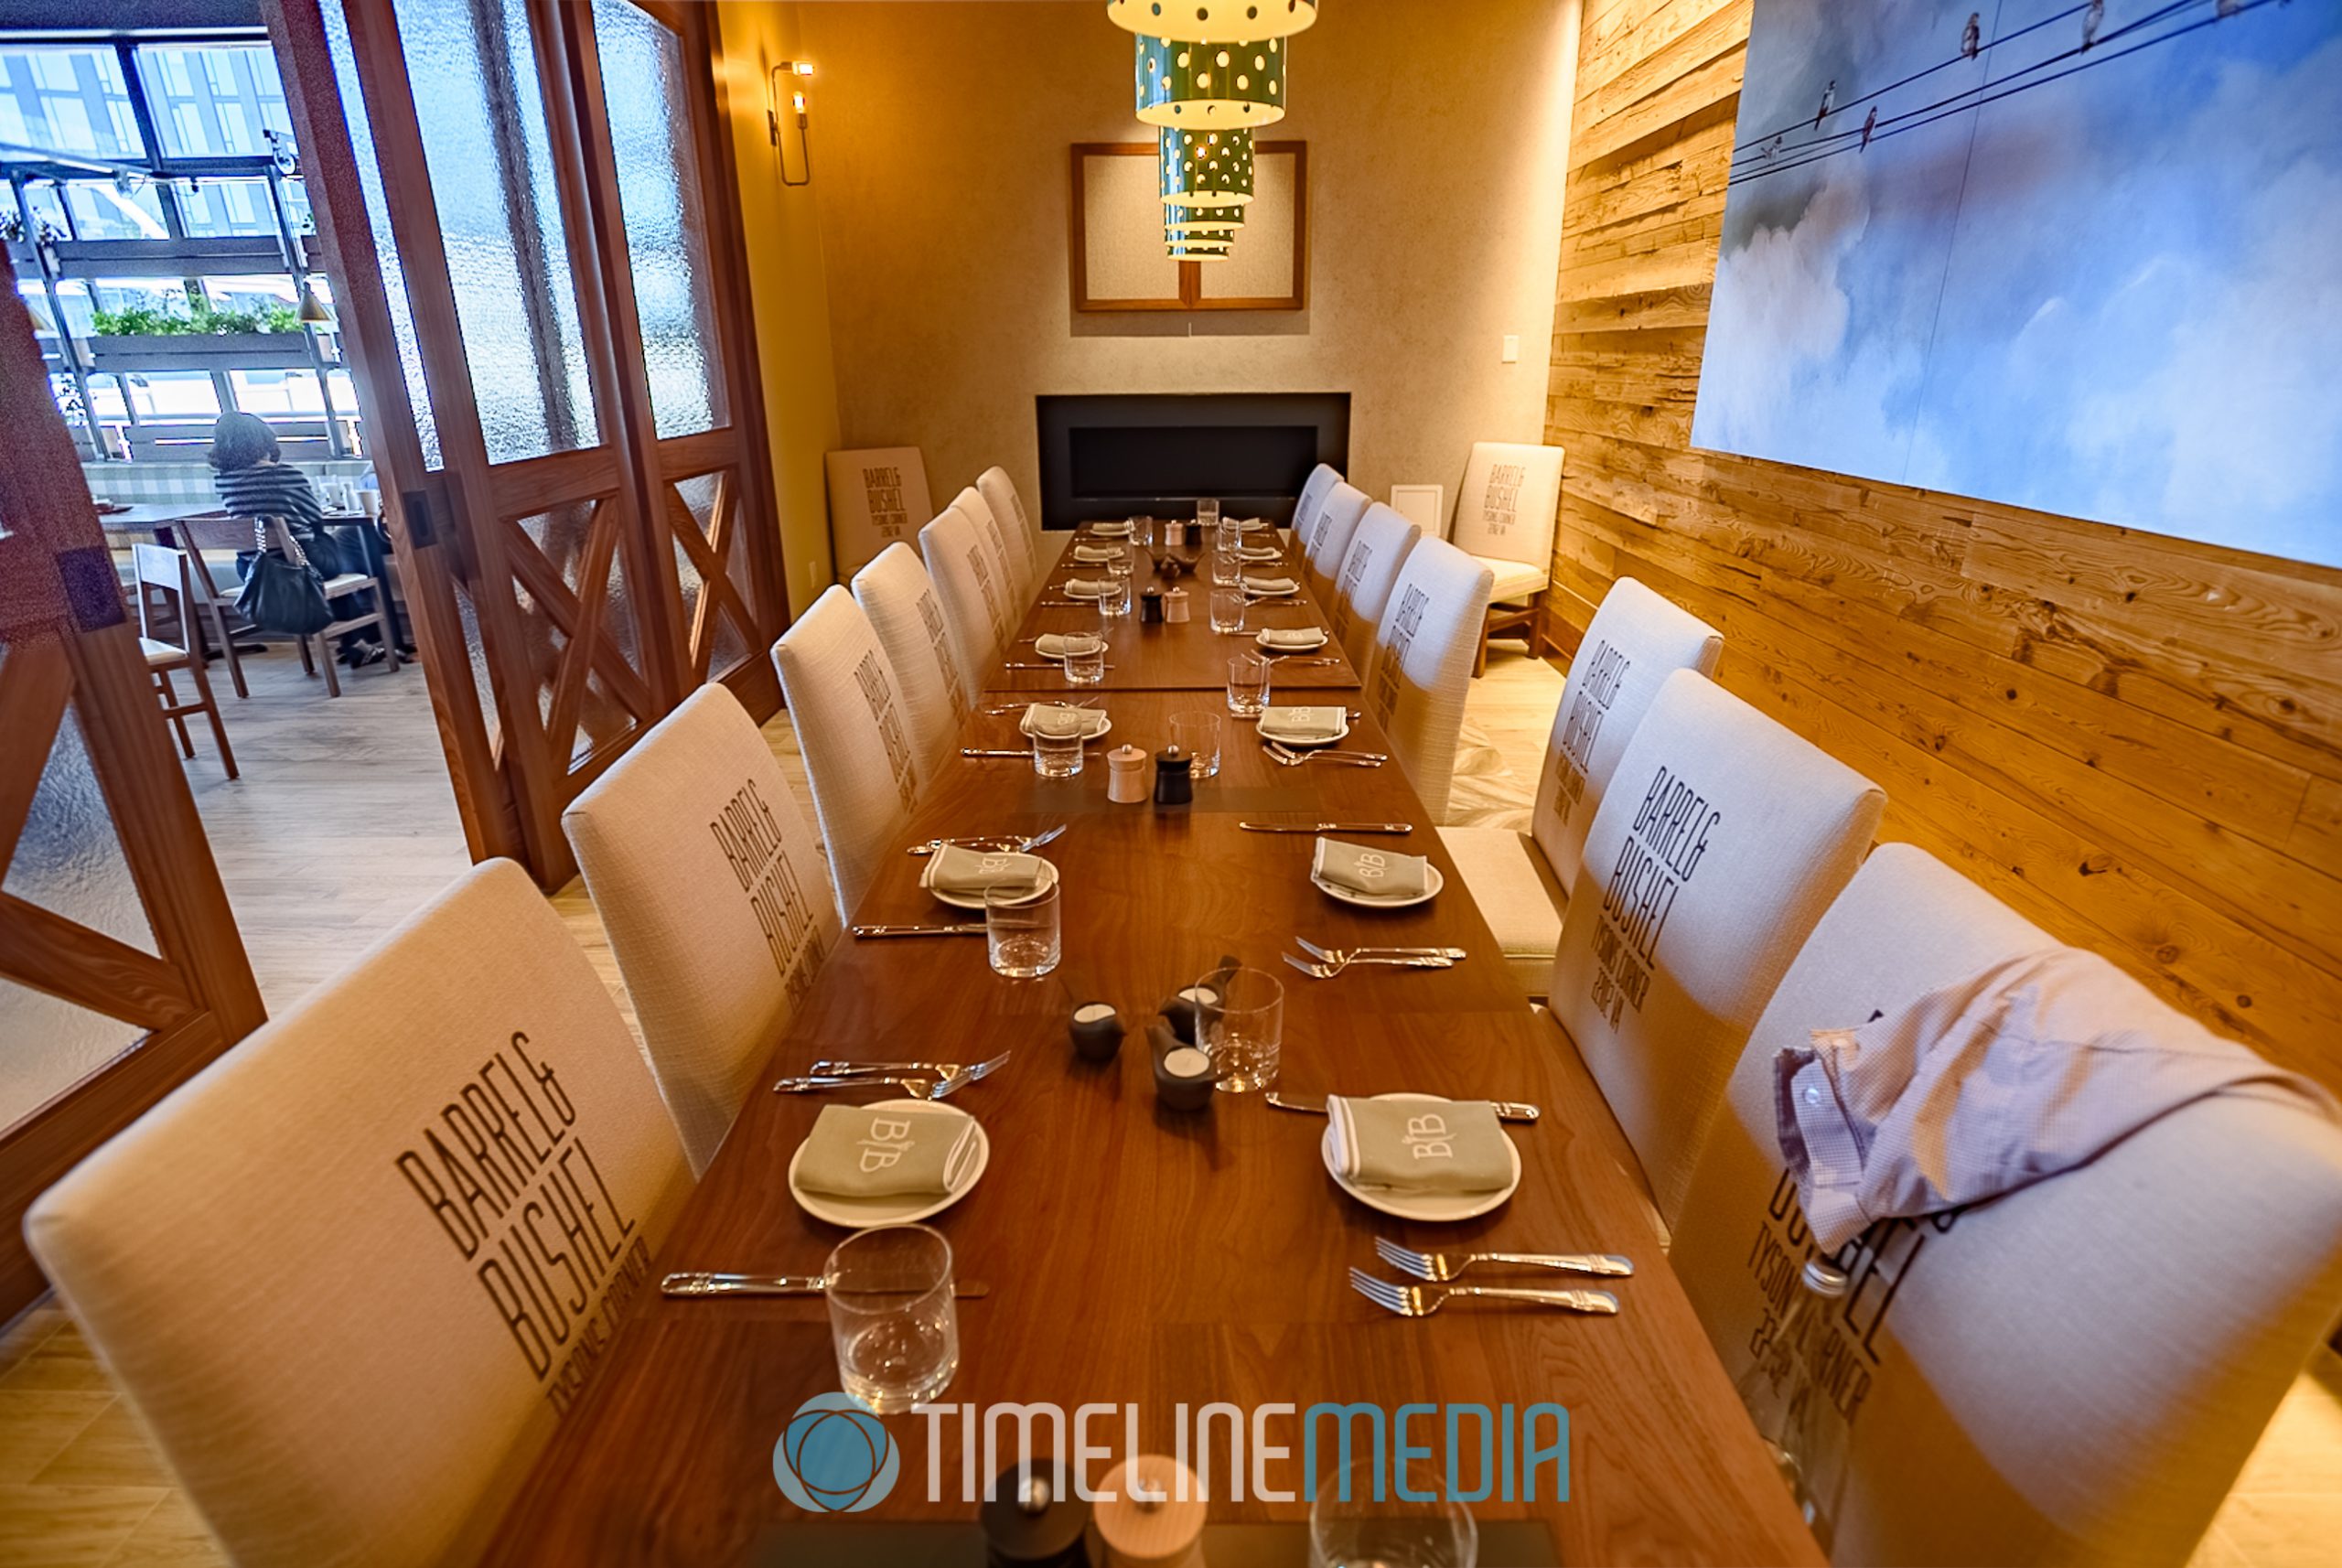 Private Dining Area B&B ©TimeLine Media